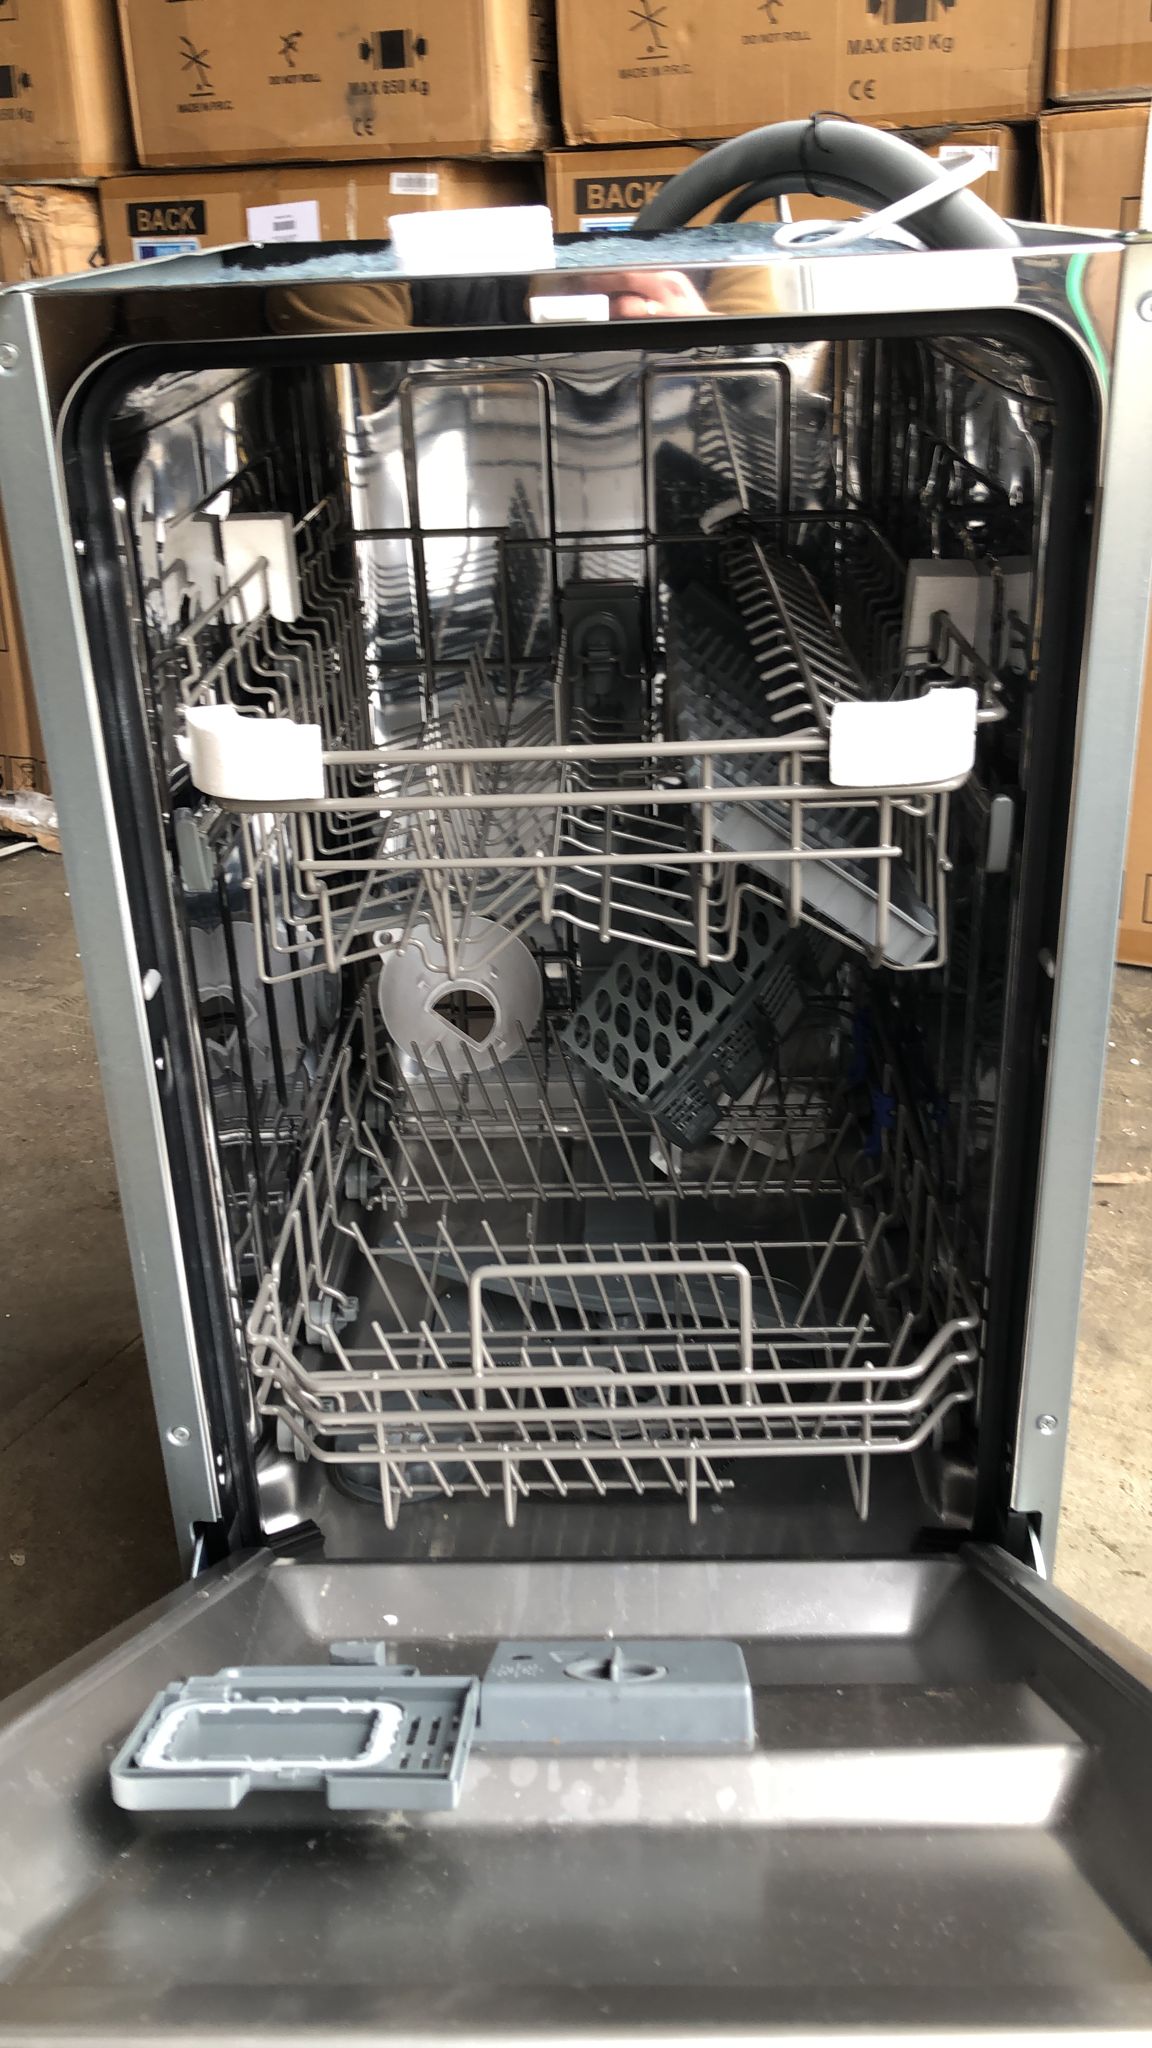 BI45DISHUK Integrated Slimline Dishwasher